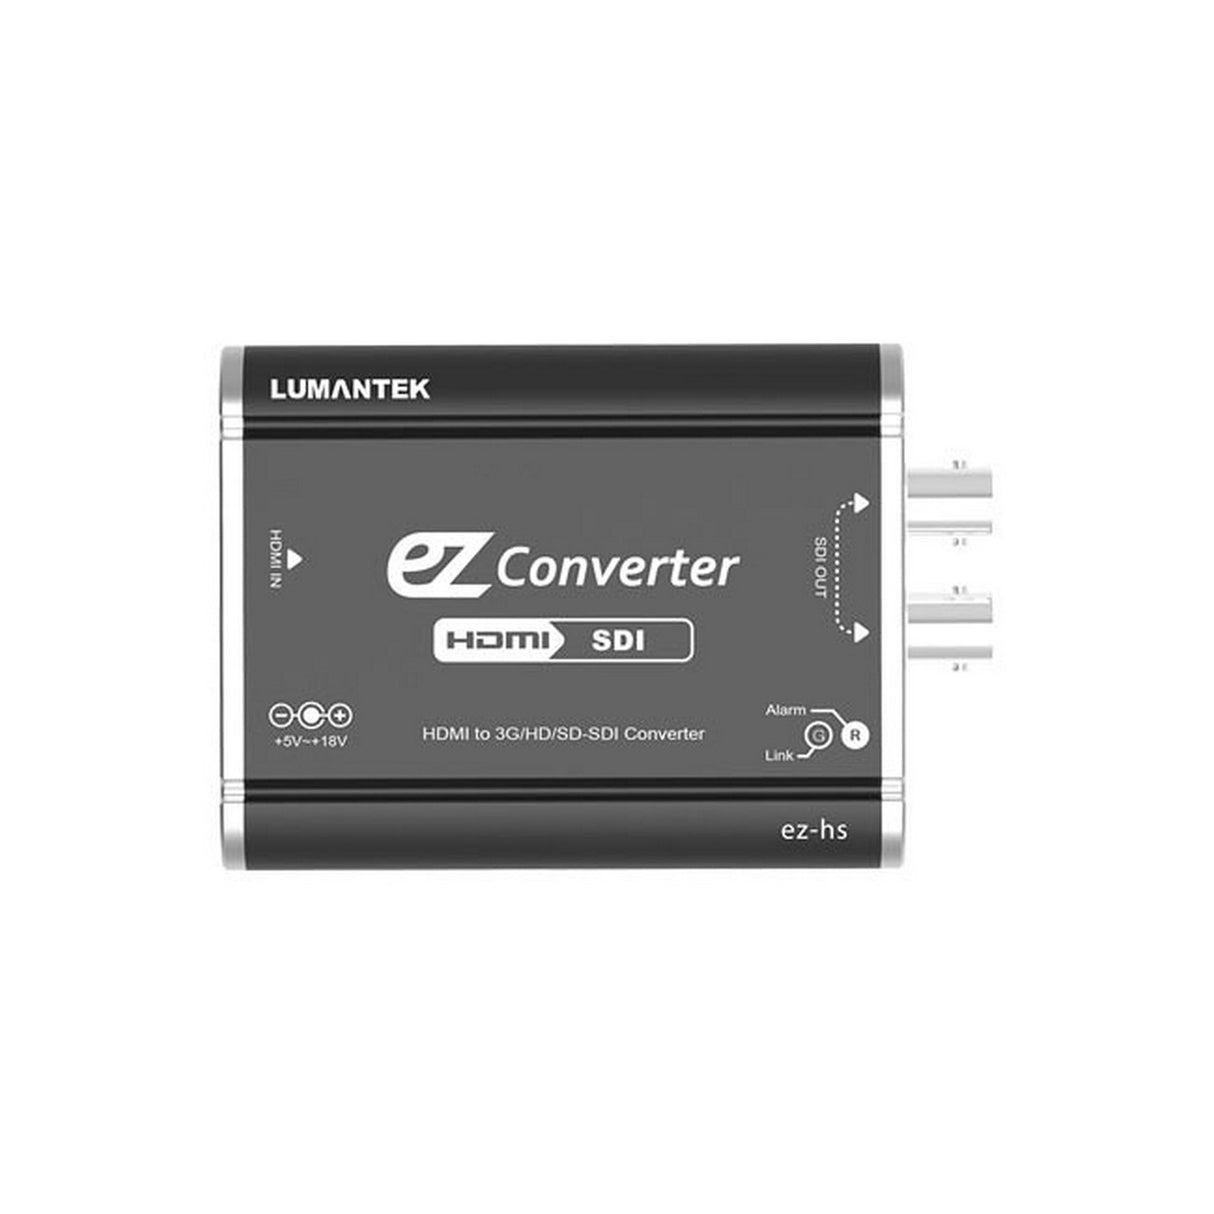 Lumantek ez-Converter HS | HDMI to 3G,HD,SD-SDI Converter